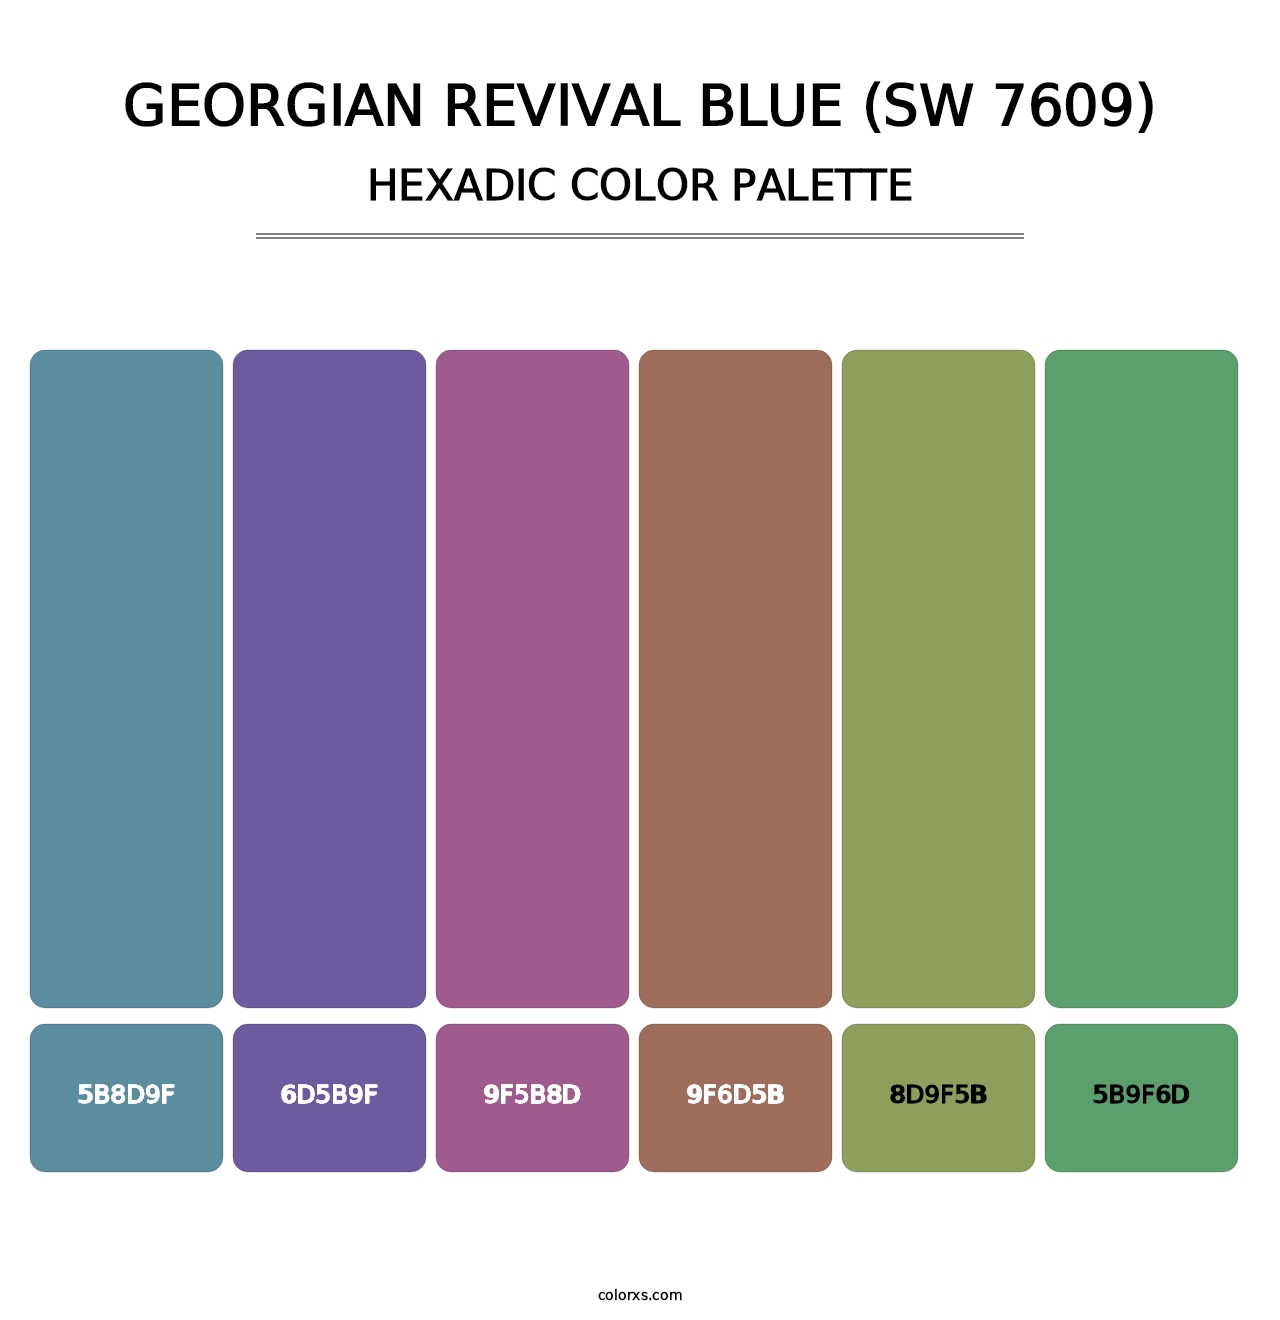 Georgian Revival Blue (SW 7609) - Hexadic Color Palette